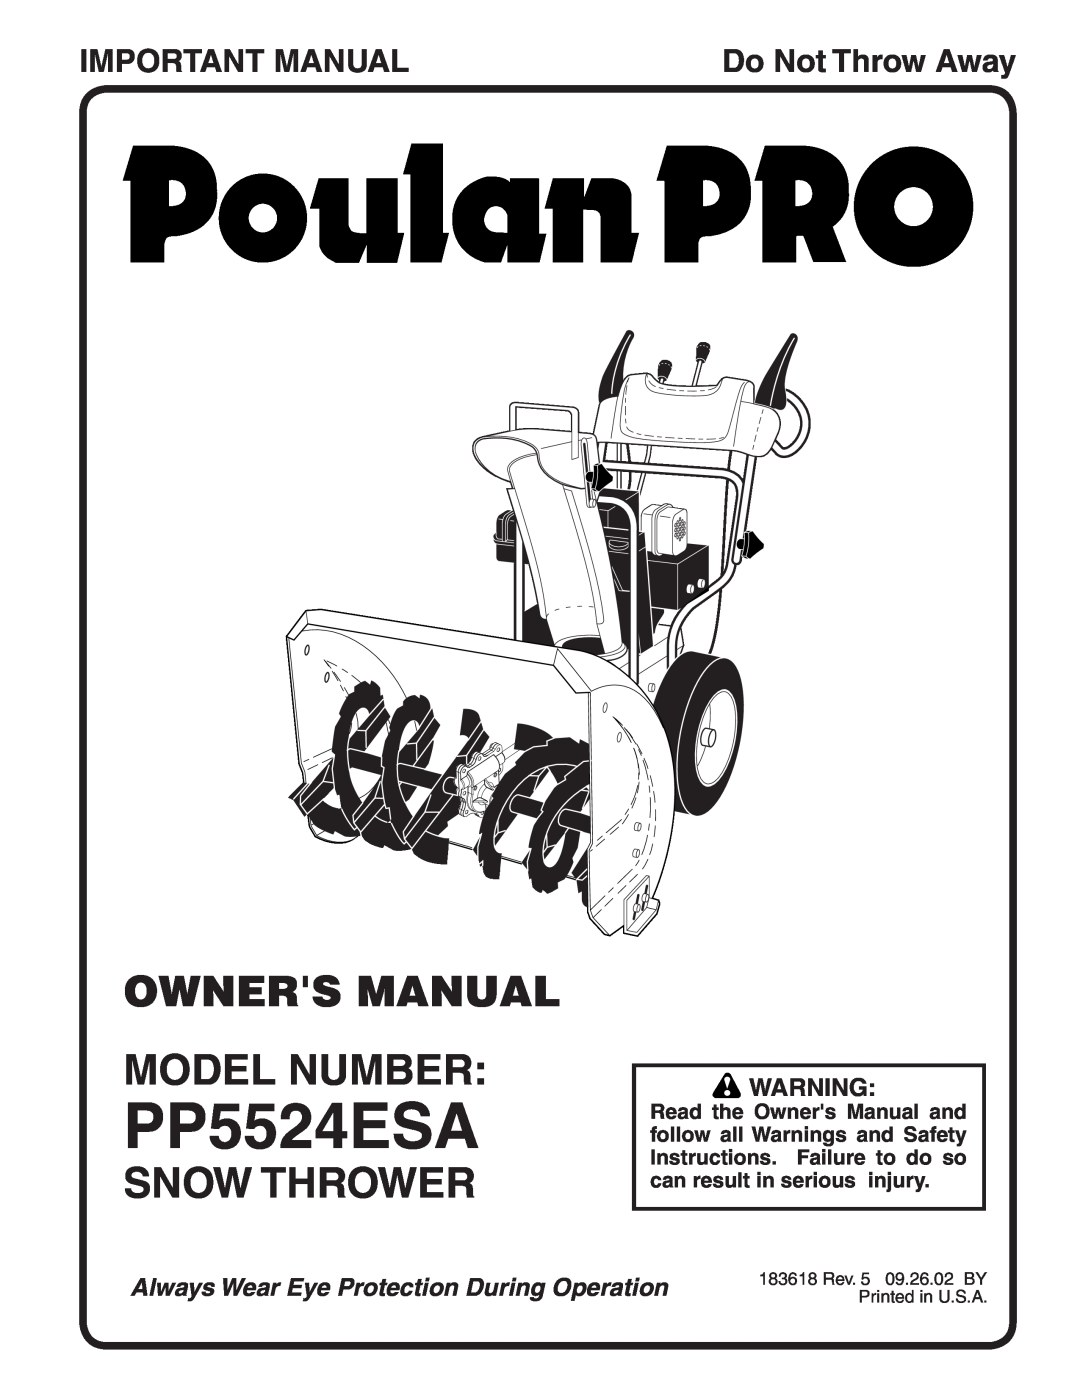 Poulan PP5524ESA owner manual Snow Thrower, Important Manual, Do Not Throw Away 